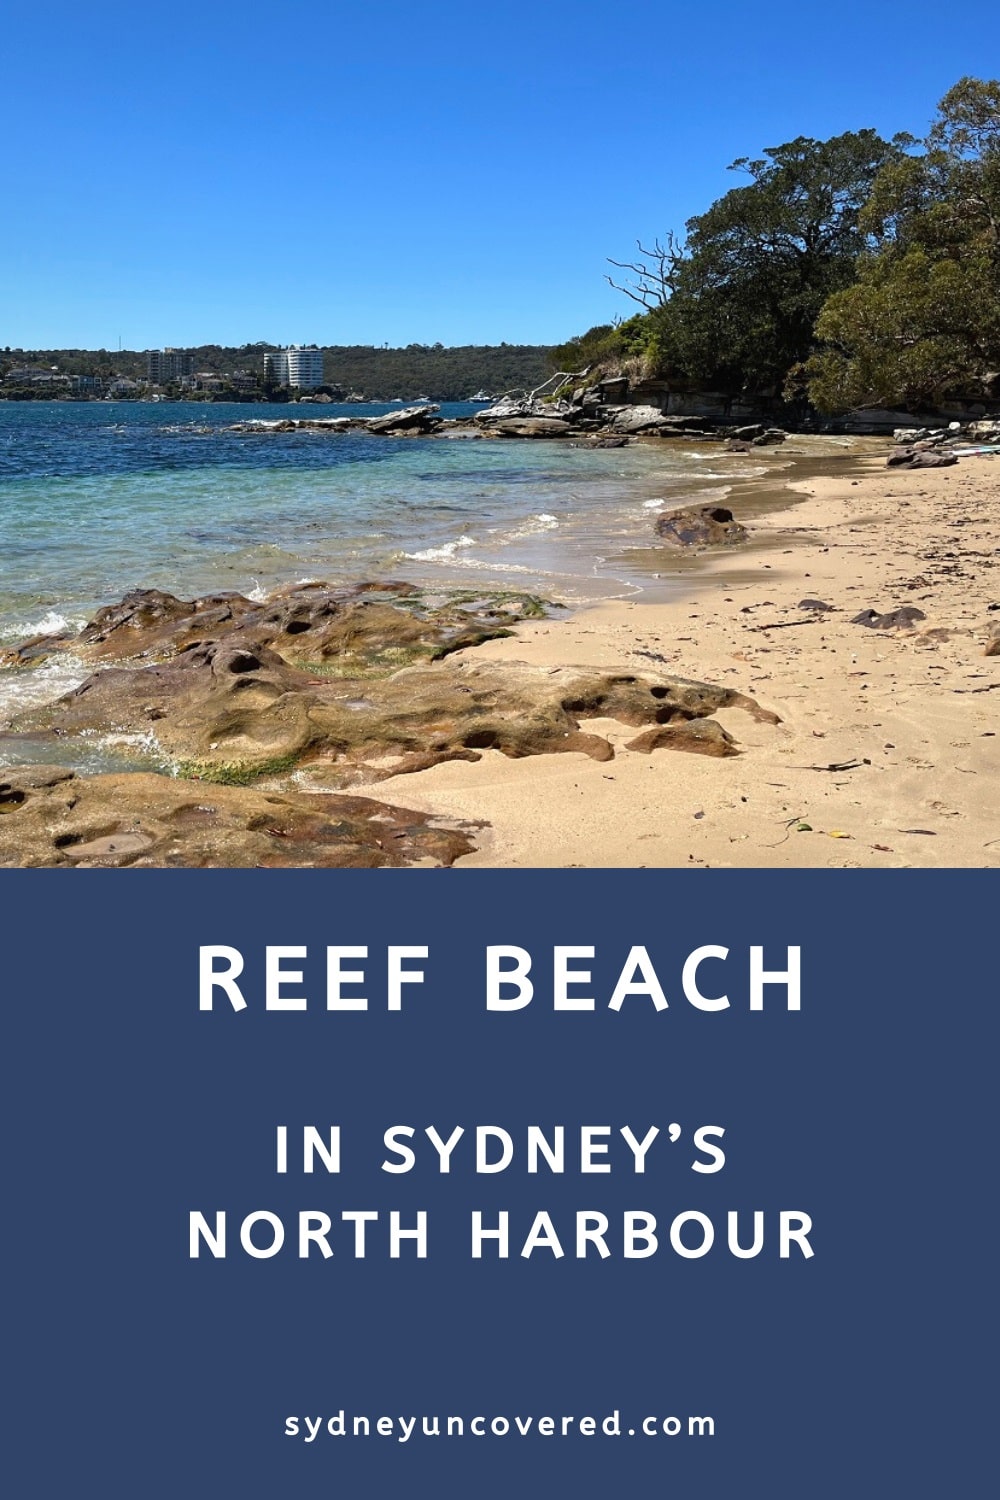 Reef Beach in Sydney's North Harbour